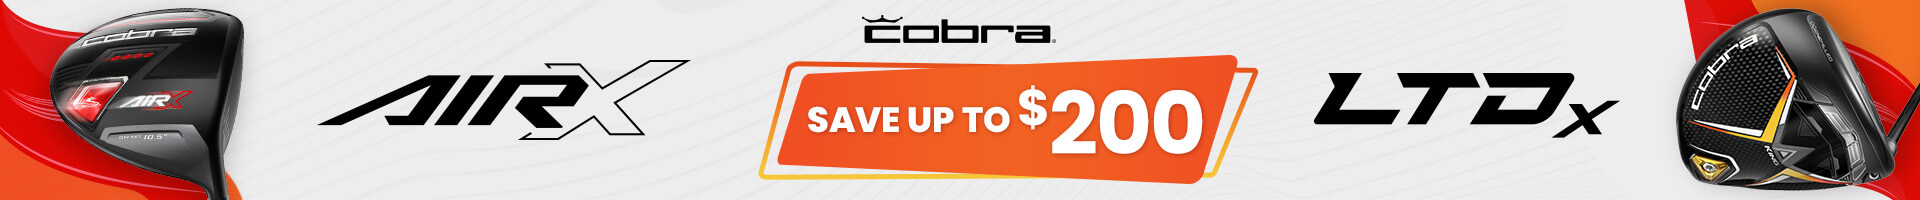 Cobra Air X and LTDx Price Drop